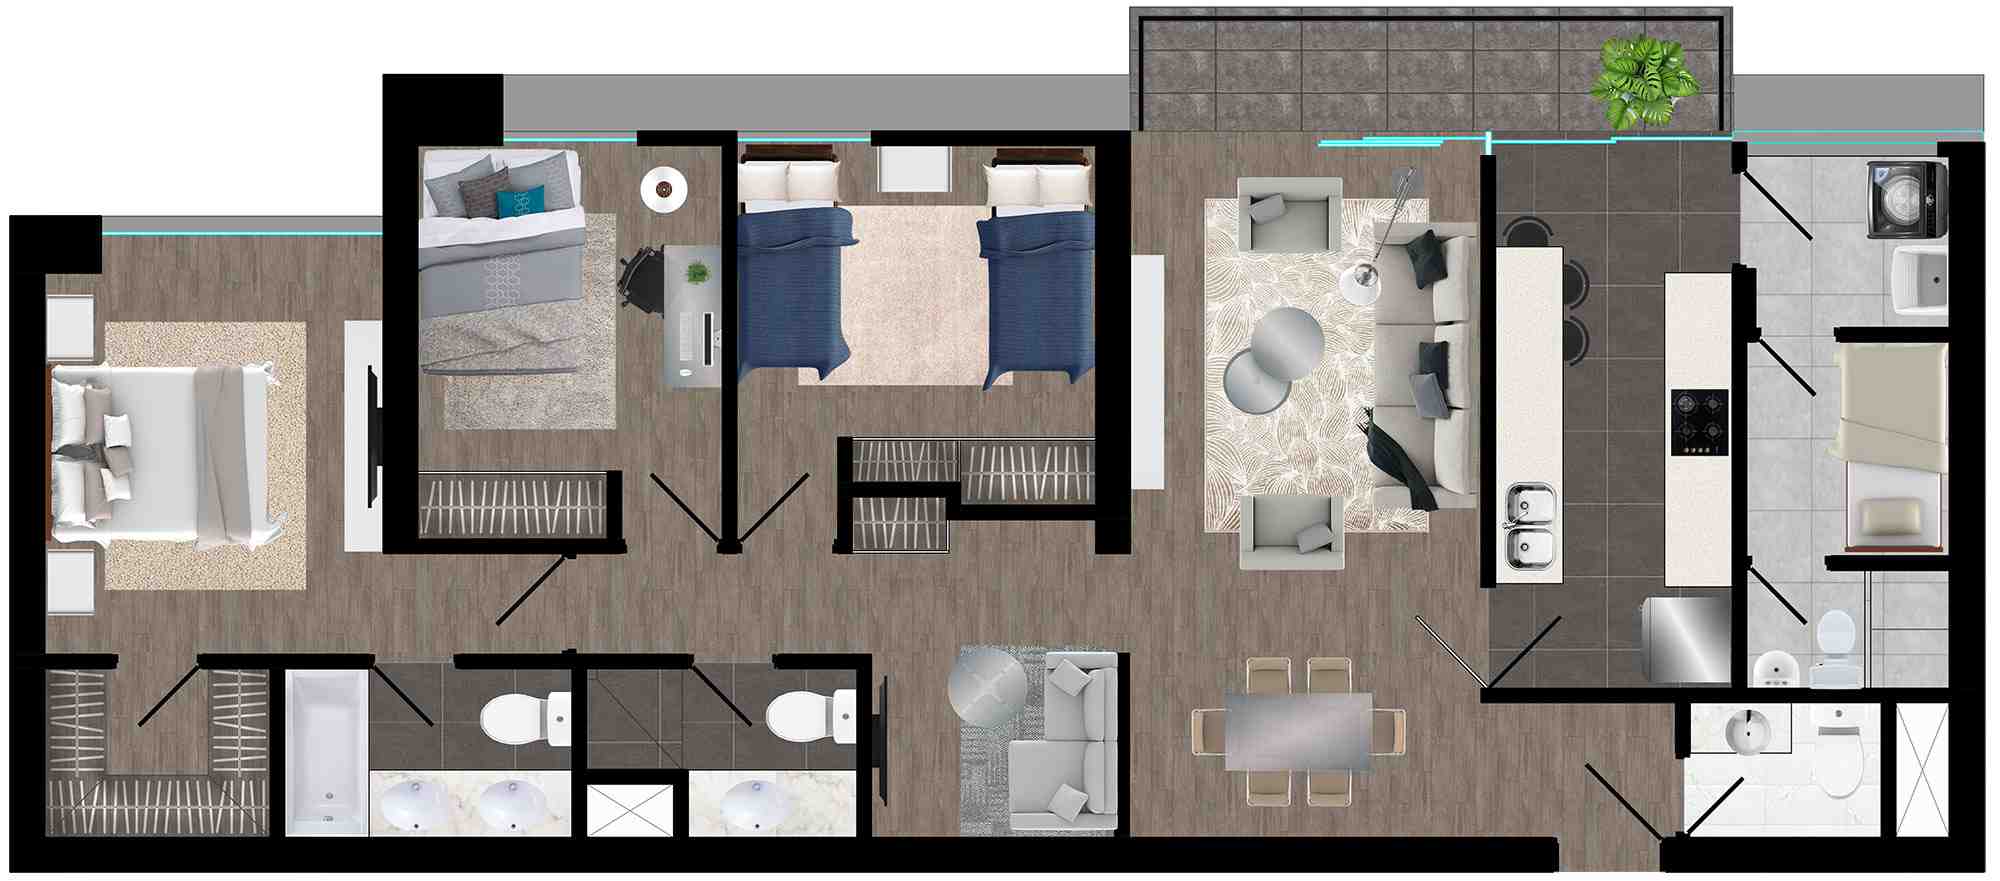 plano 3 dormitorios 114m2 muv arquimia 2